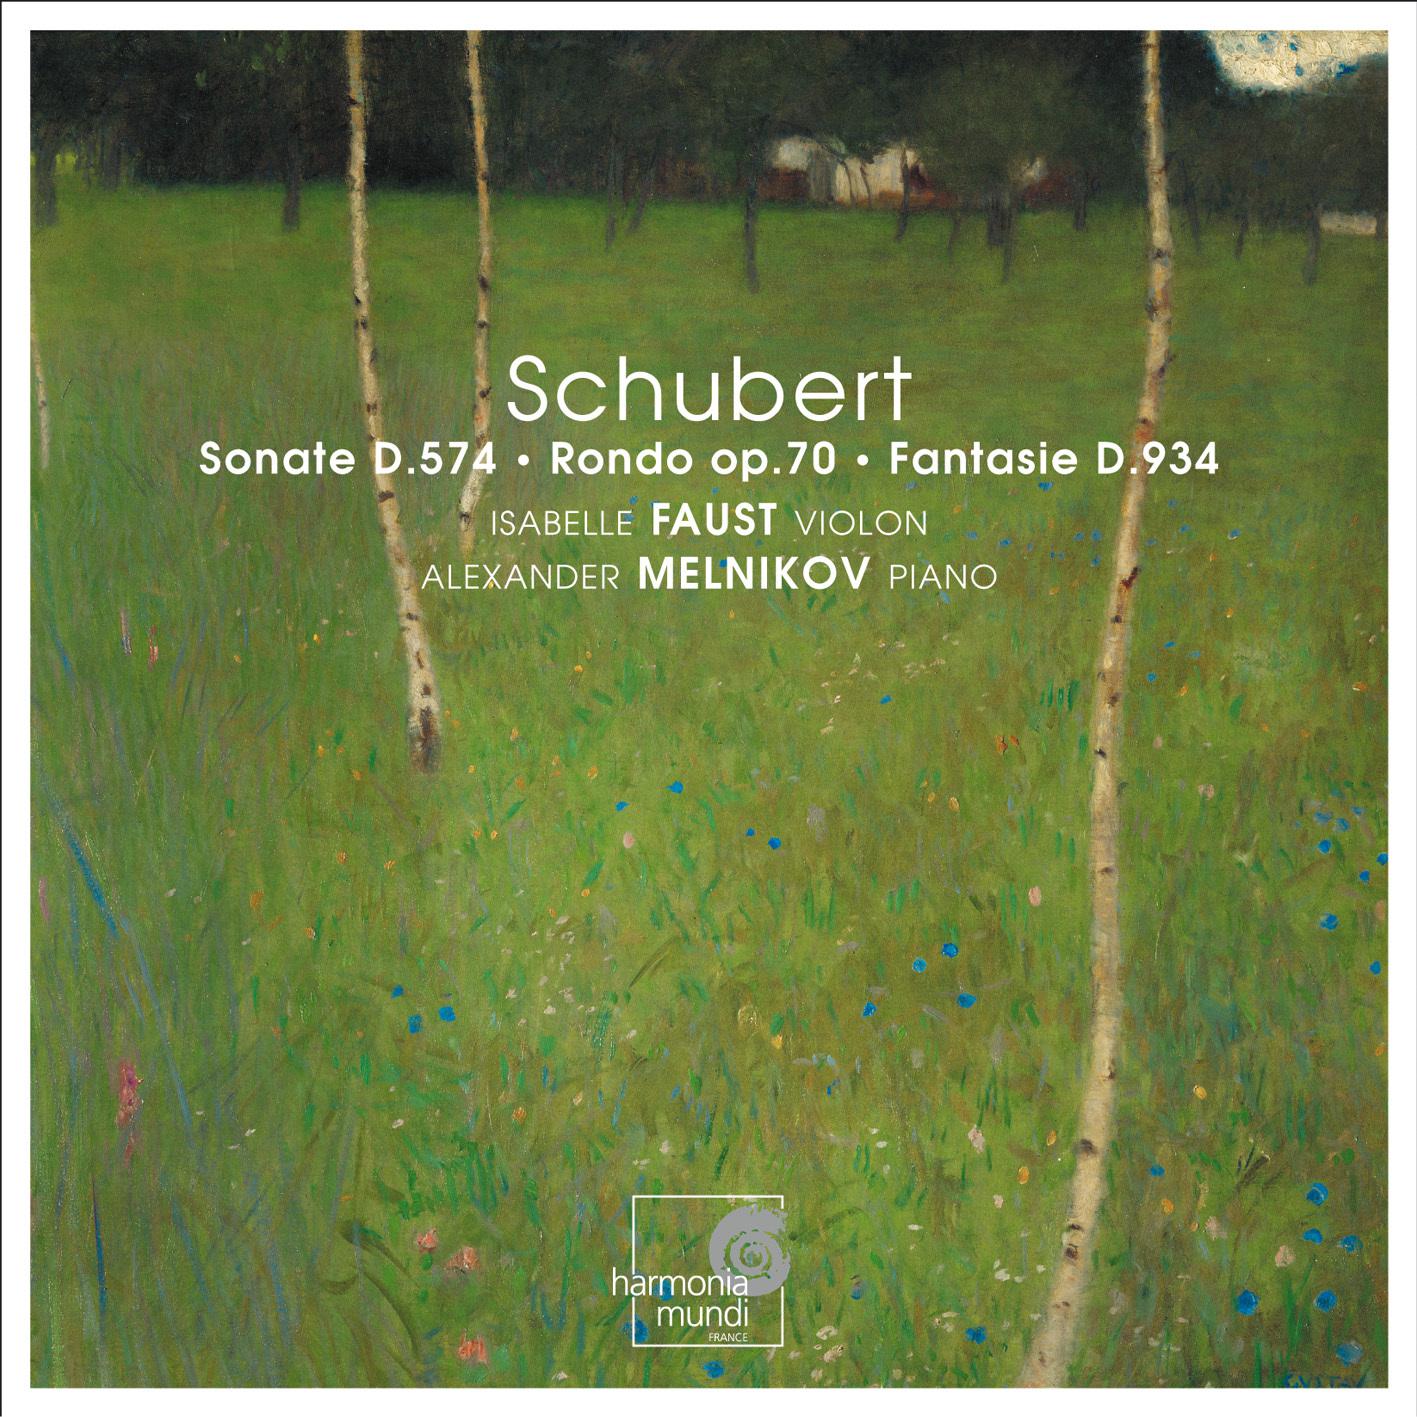 Sonate en La majeur, Op. posth.162, D.574: I. Allegro moderato